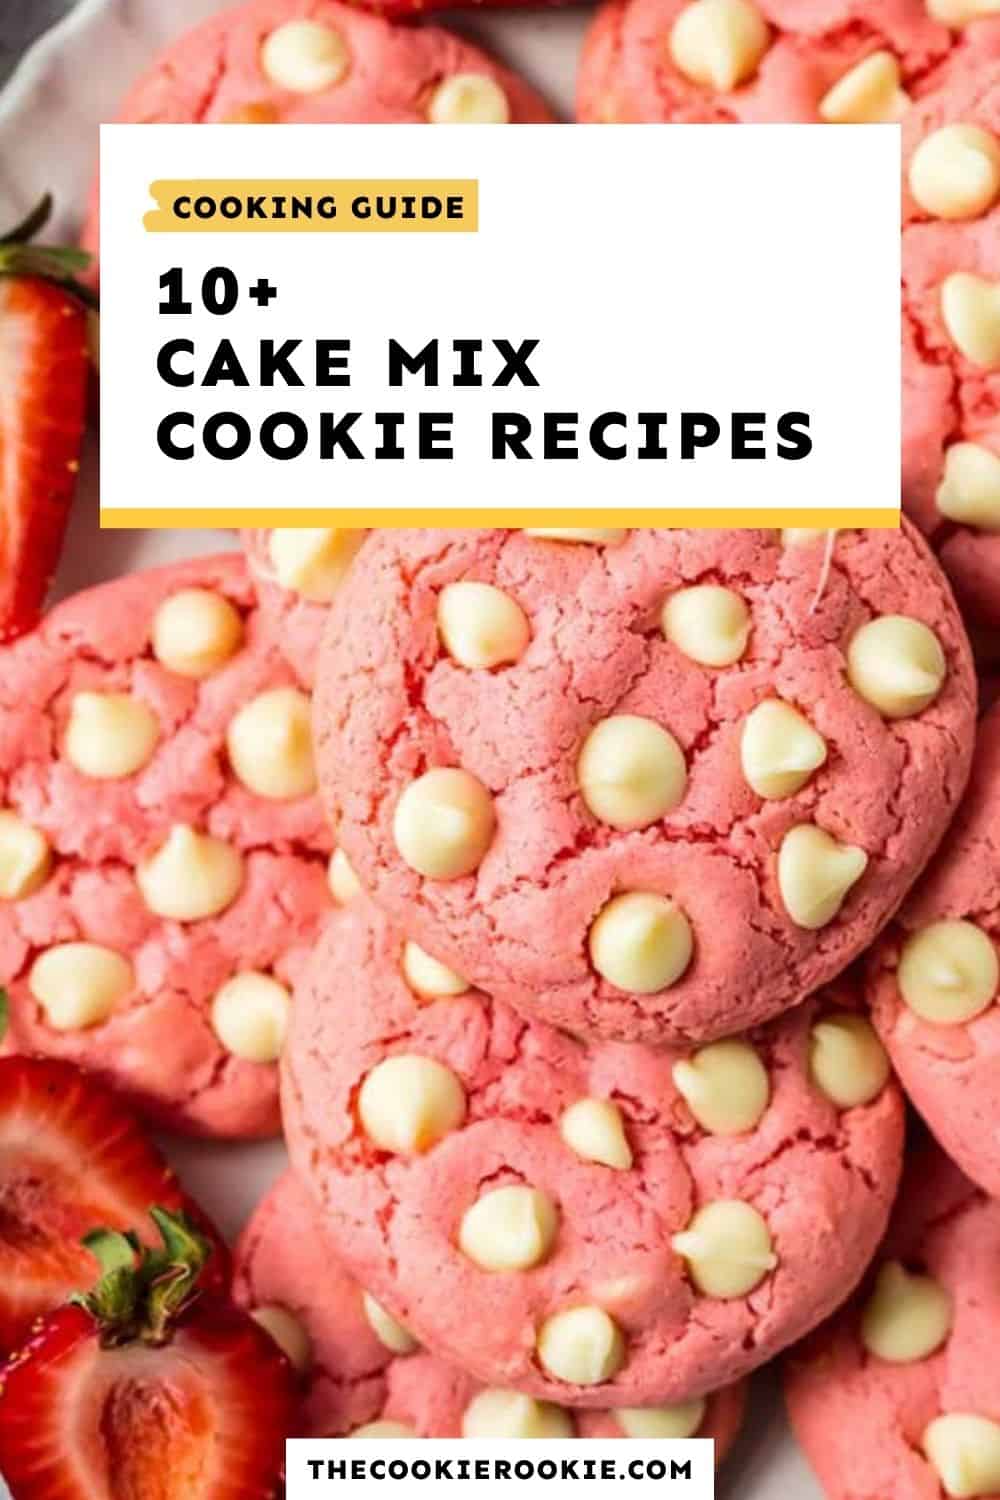 https://www.thecookierookie.com/wp-content/uploads/2018/06/cake-mix-cookies.jpg